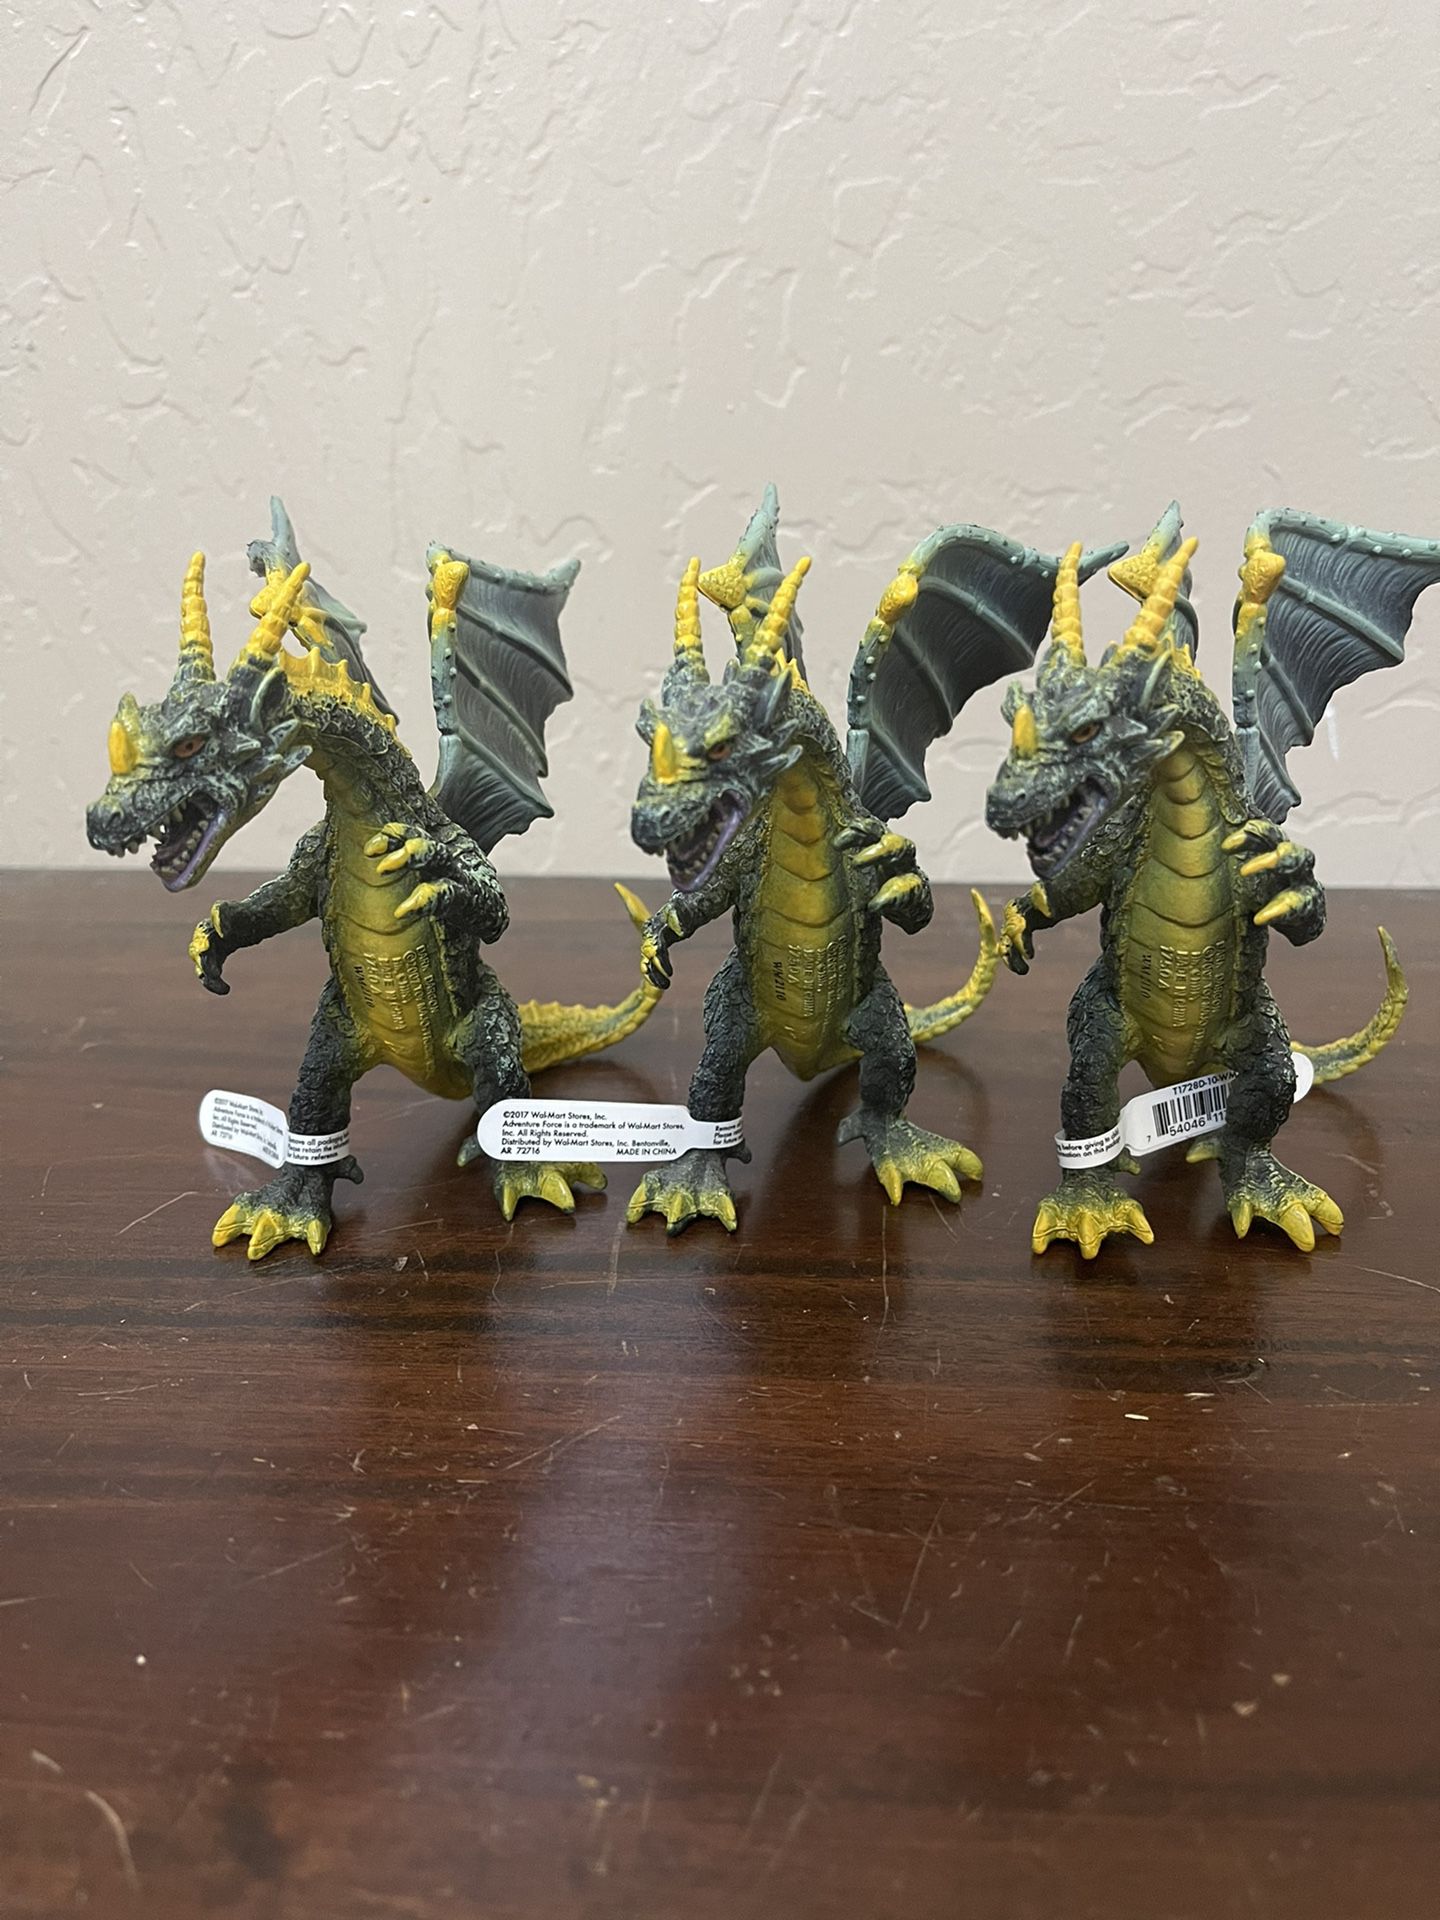 Dark Dragon 5” Figure Figurine 2017 Toy Major Trading medieval fantasy green 3+